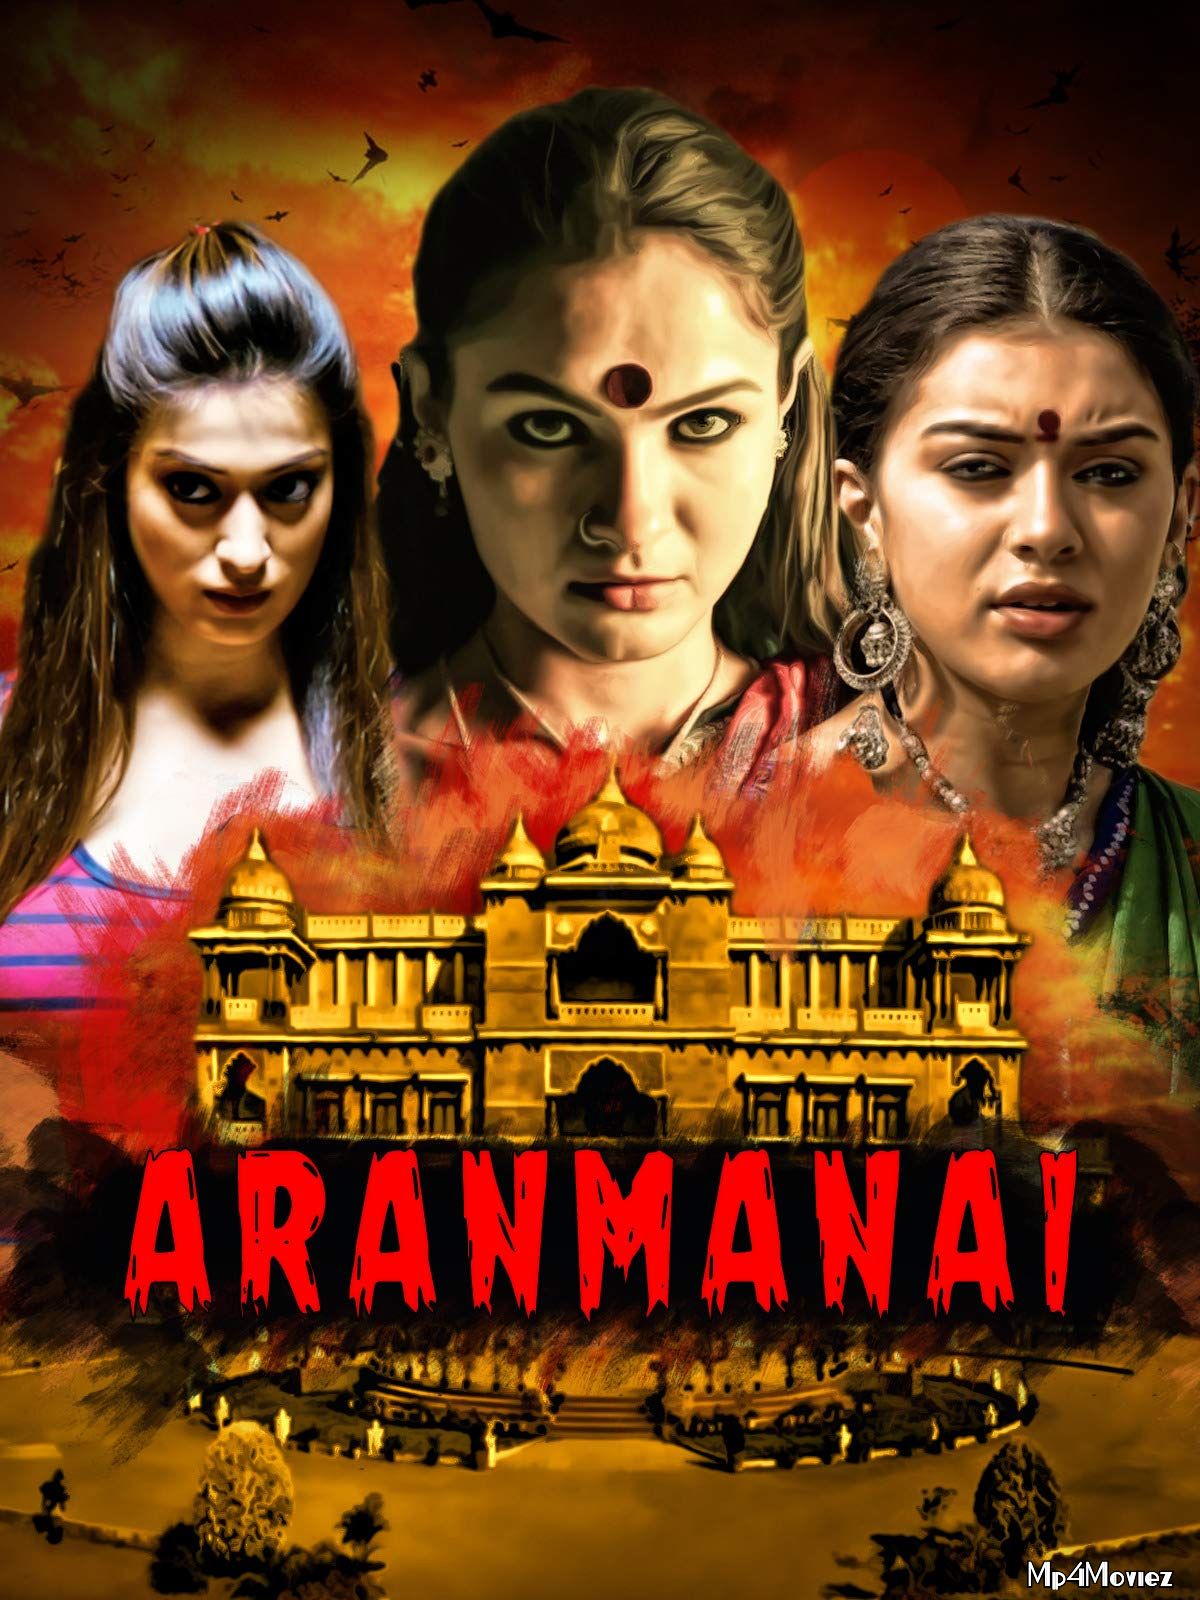 Rajmahal (Aranmanai) 2020 Hindi Dubbed Full Movie download full movie